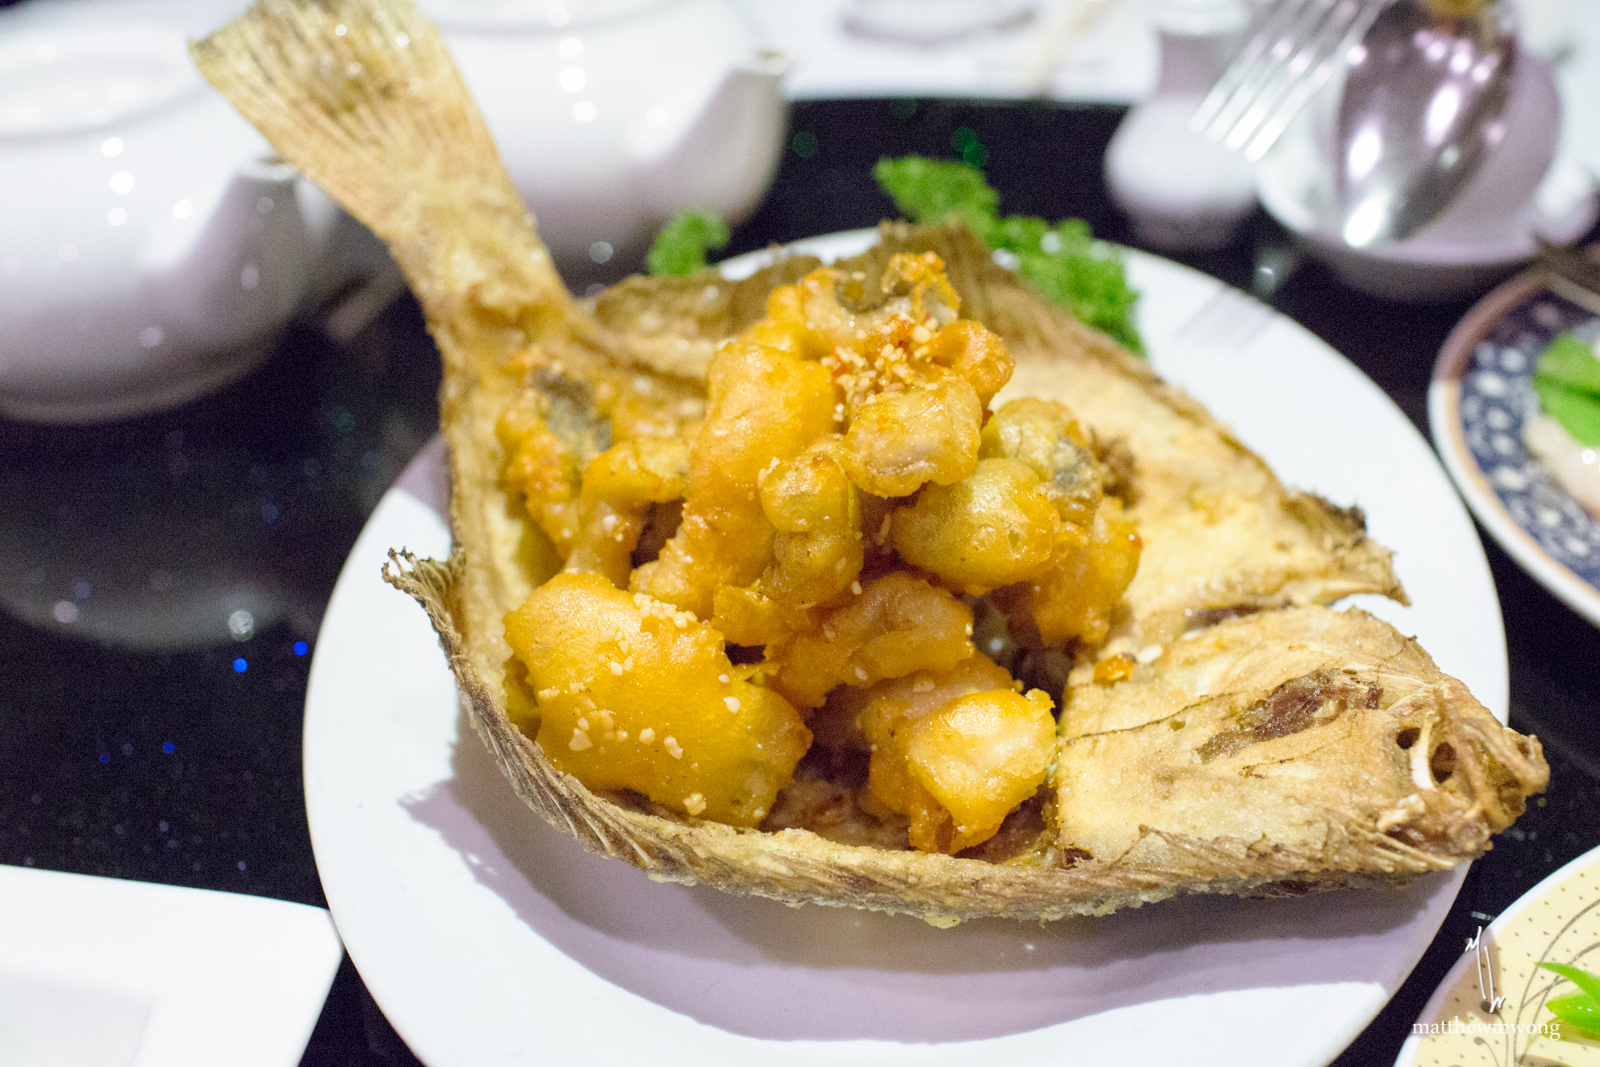 Salt and Chilli Flounder, Filleted lightly battered then wok-tossed with garlic, chilli and sea salt, served on a Fish Bone Basket